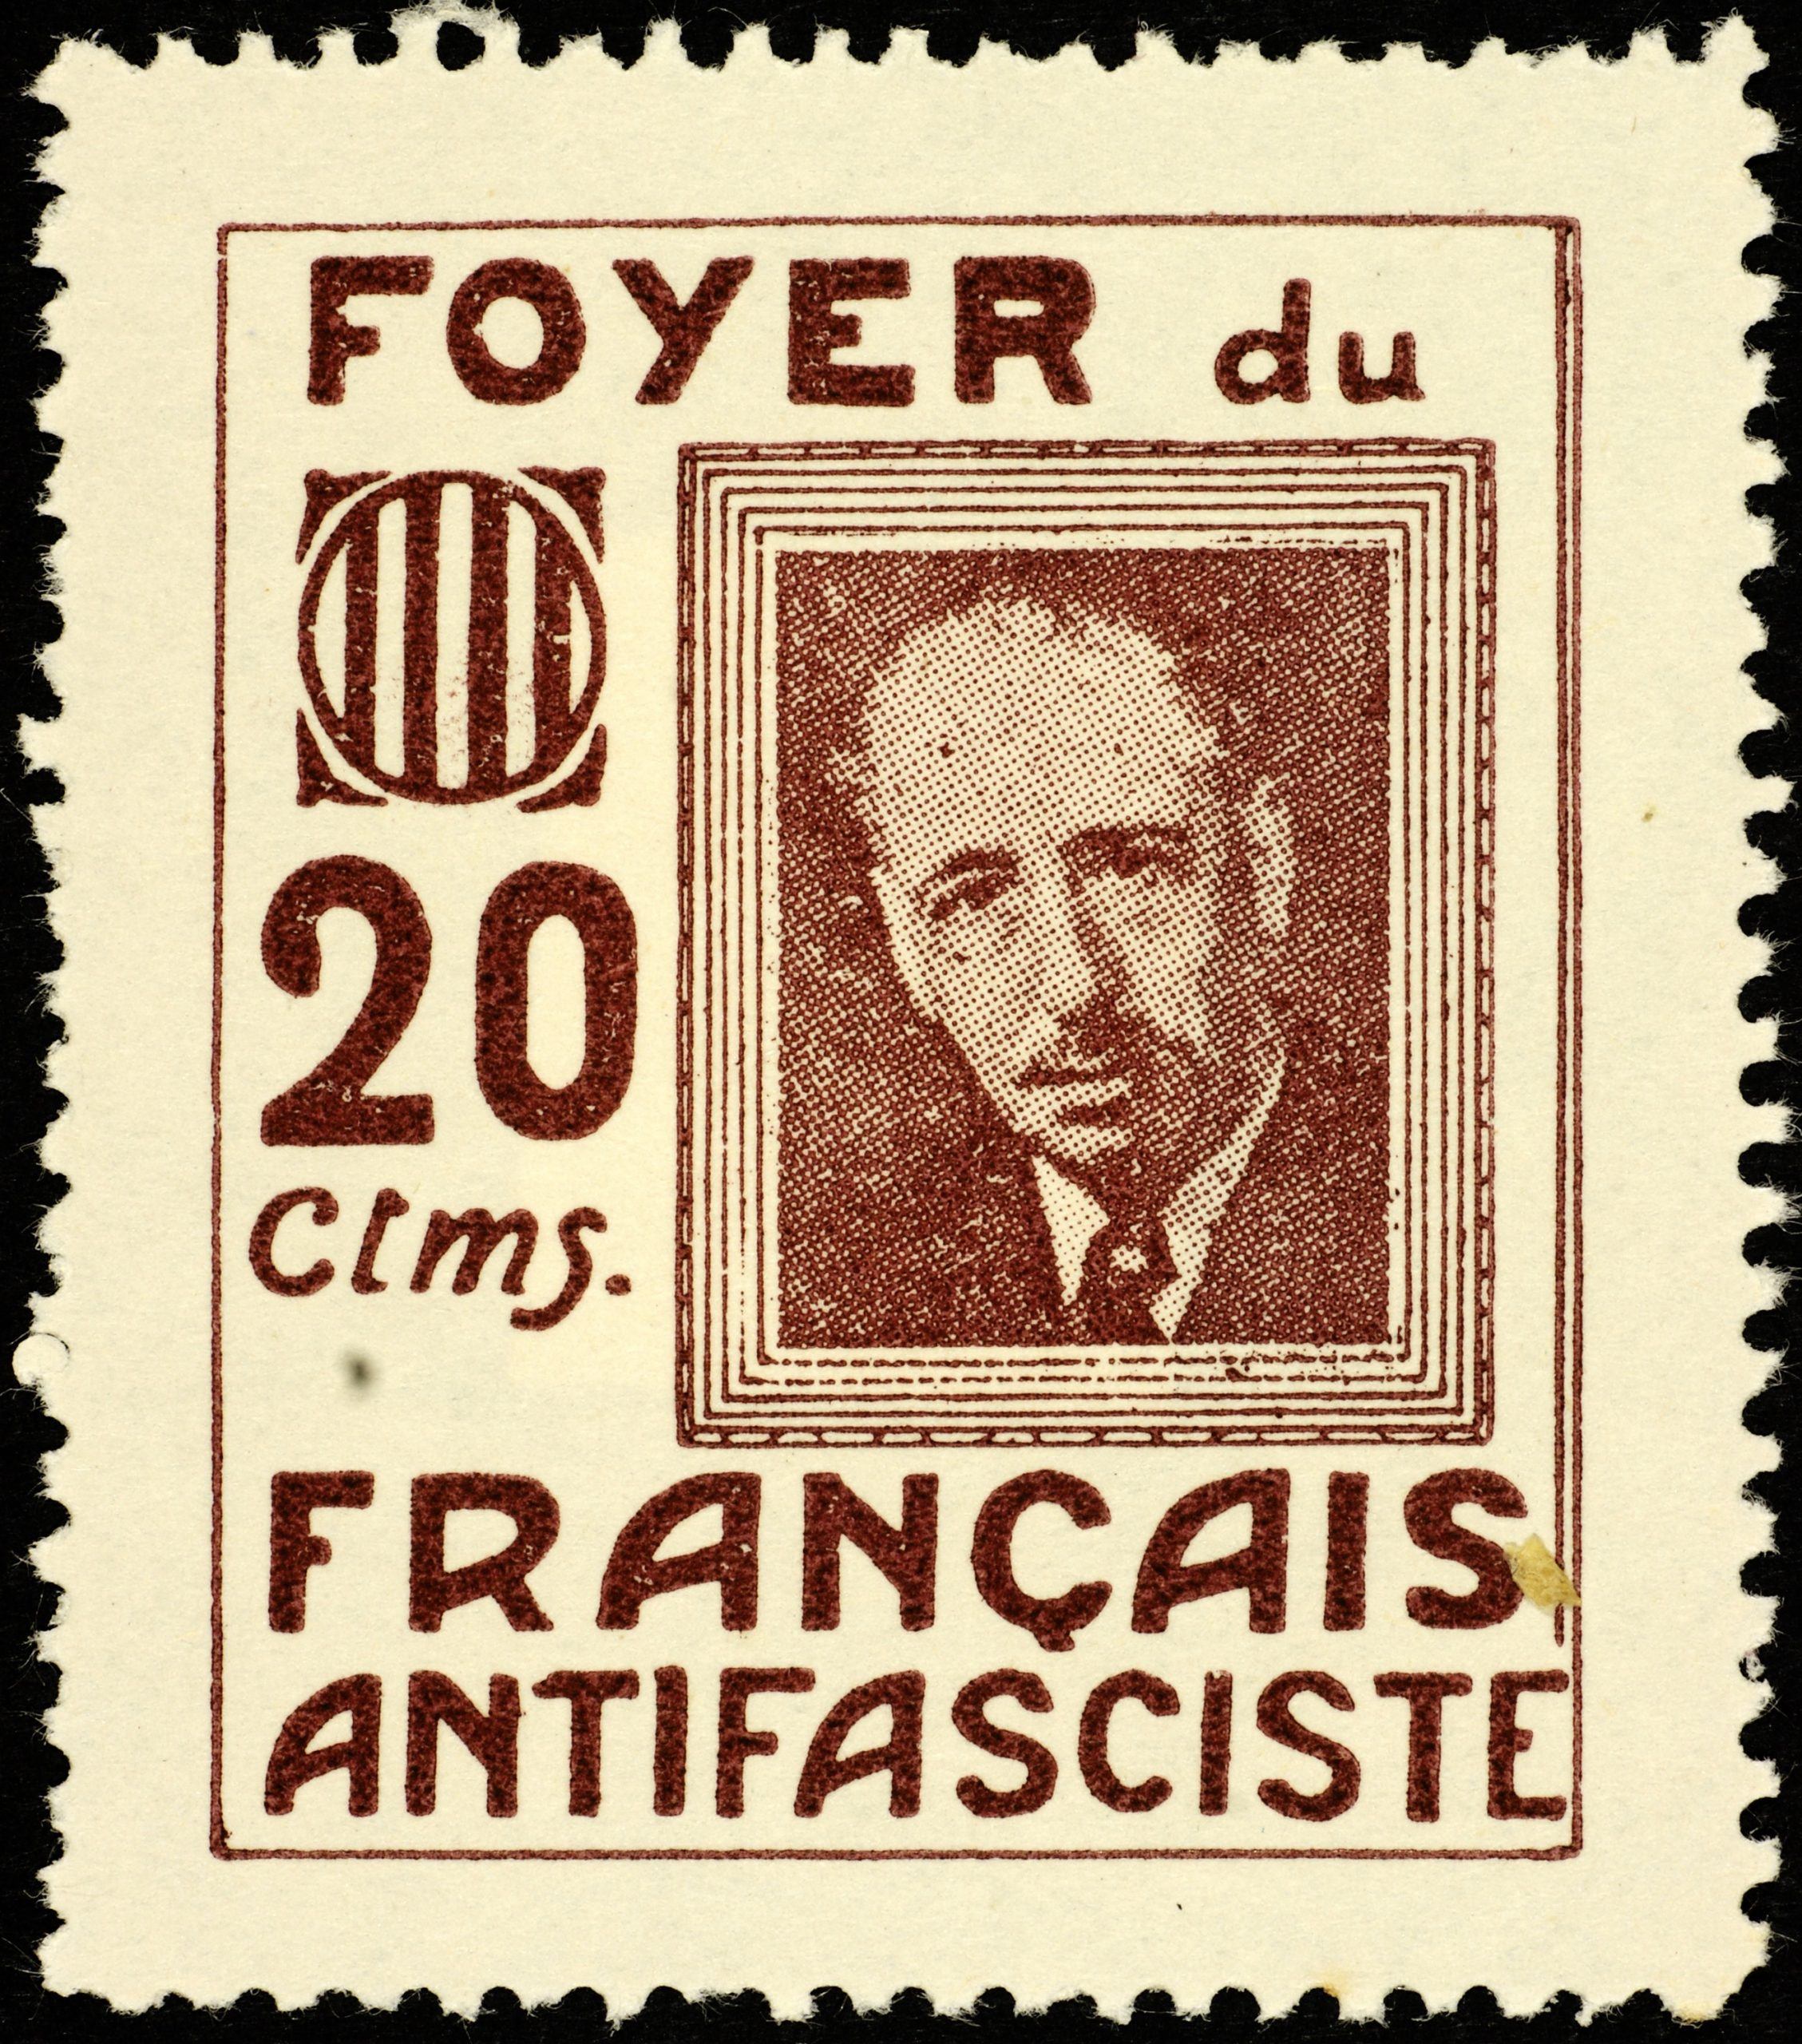 «Foyer du français antifasciste»